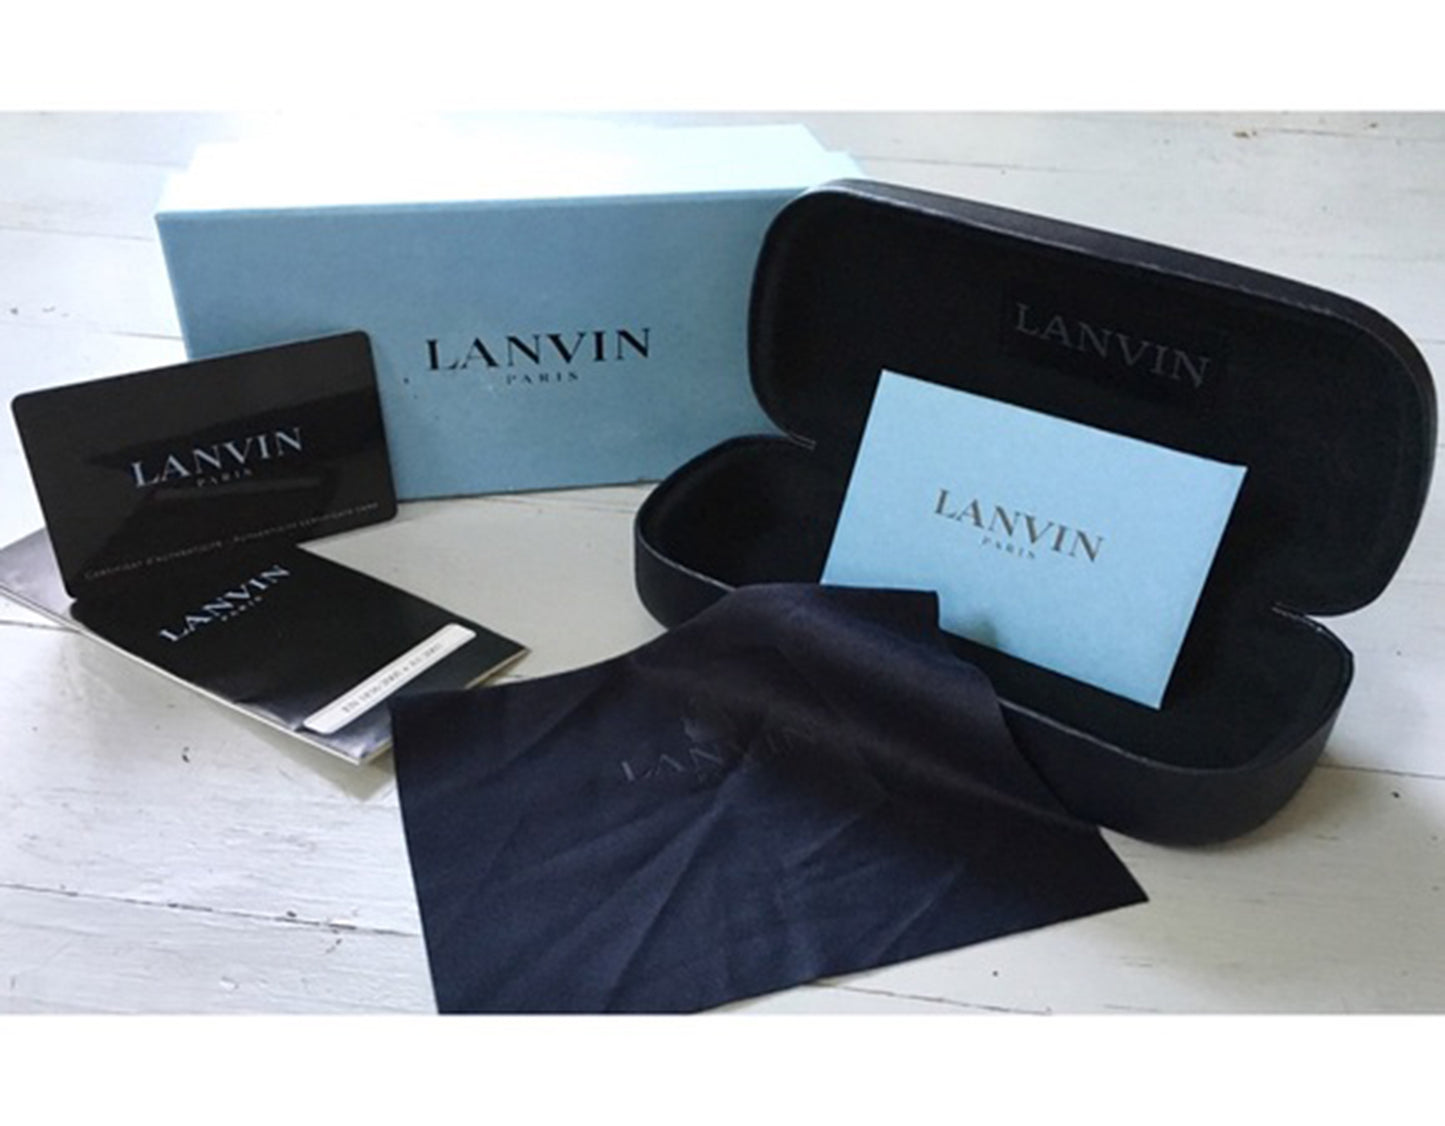 Lanvin VLN746M-700Y-51 51mm New Eyeglasses